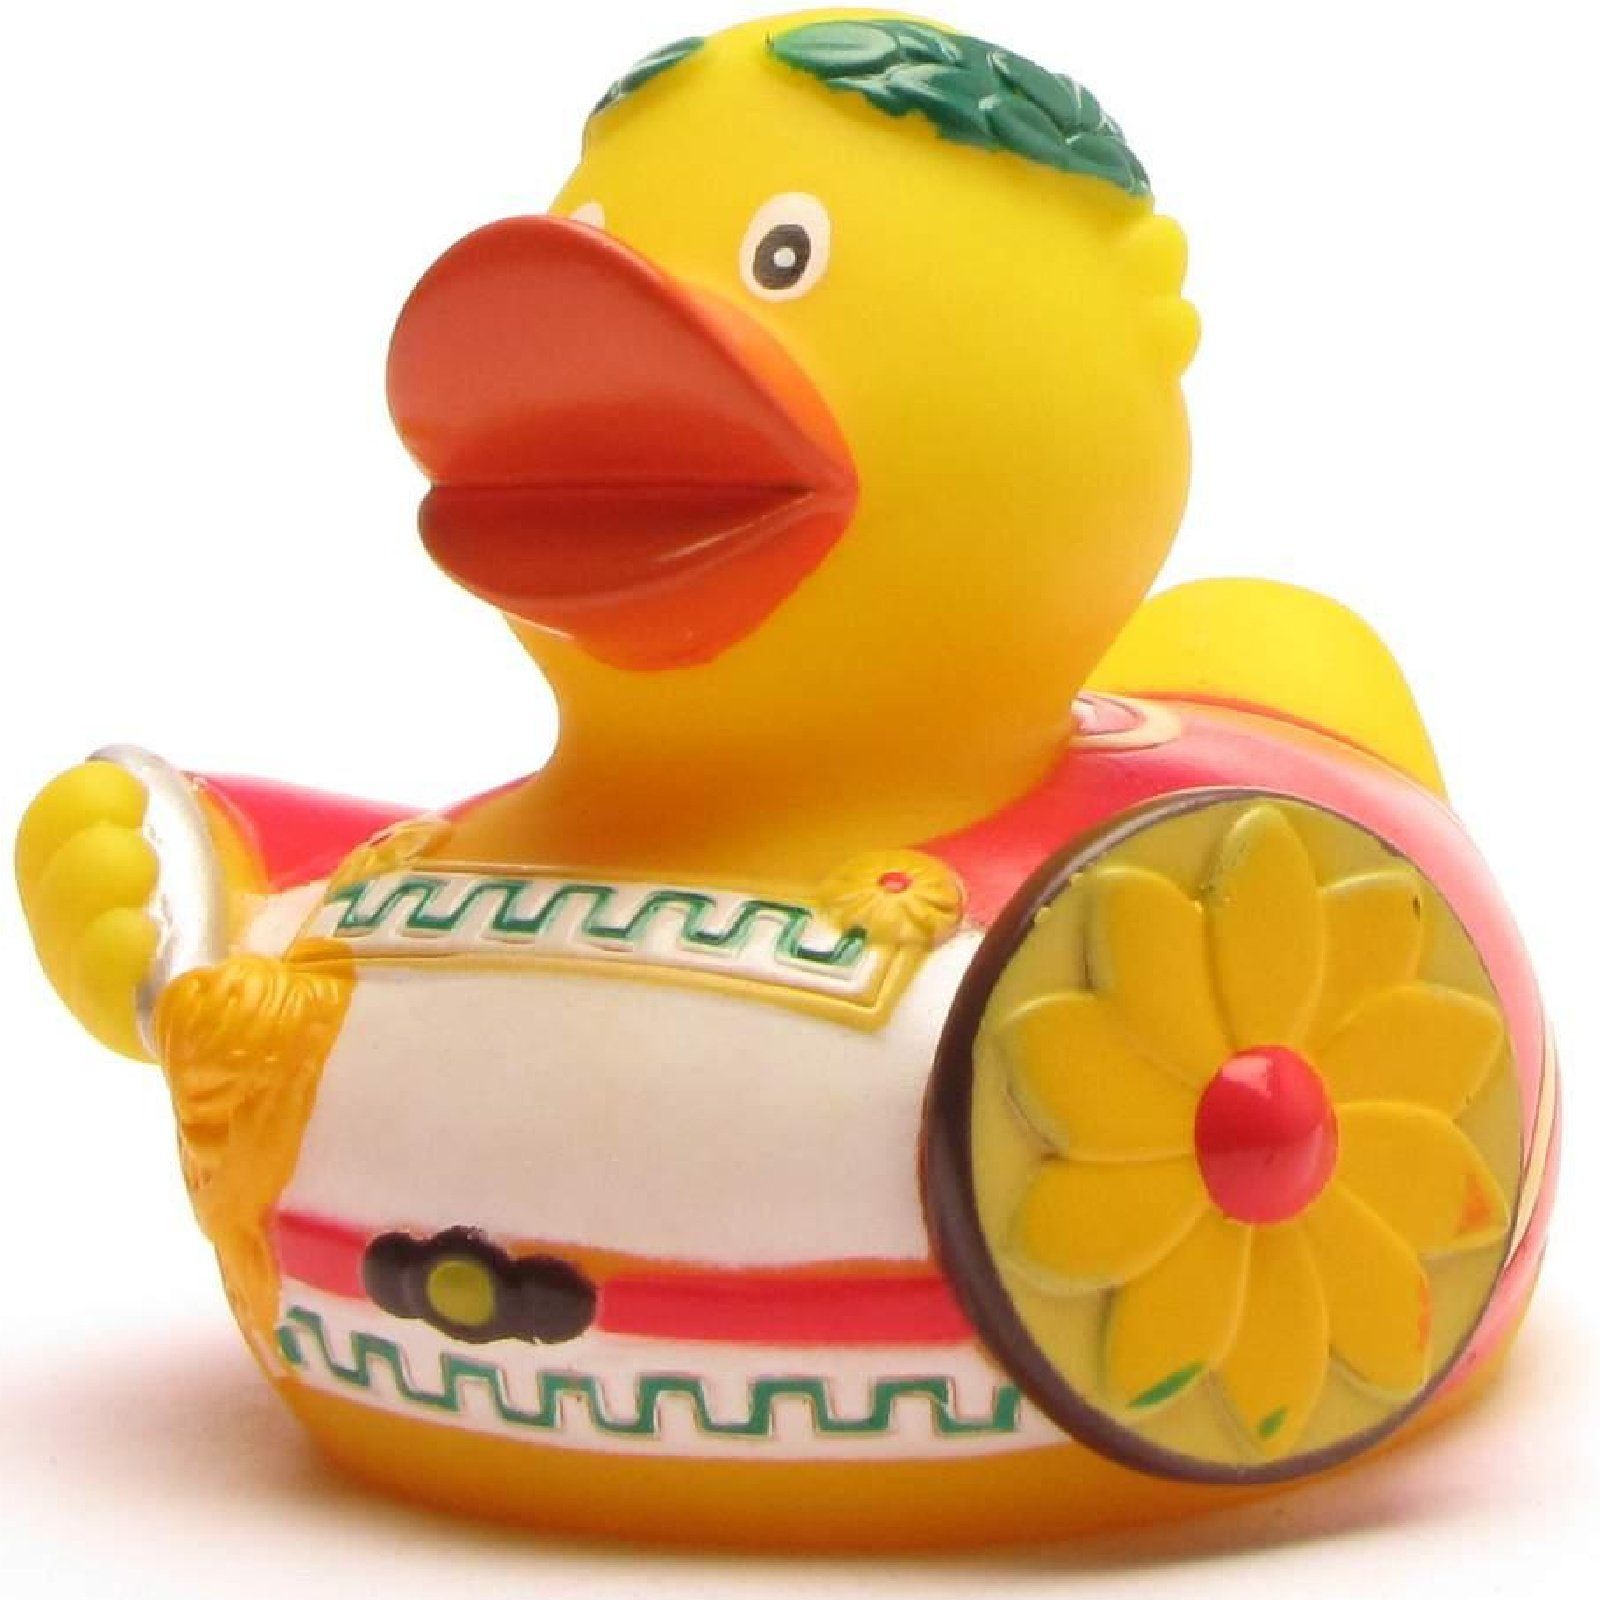 Schnabels Badespielzeug City Duck Rom - Badeente